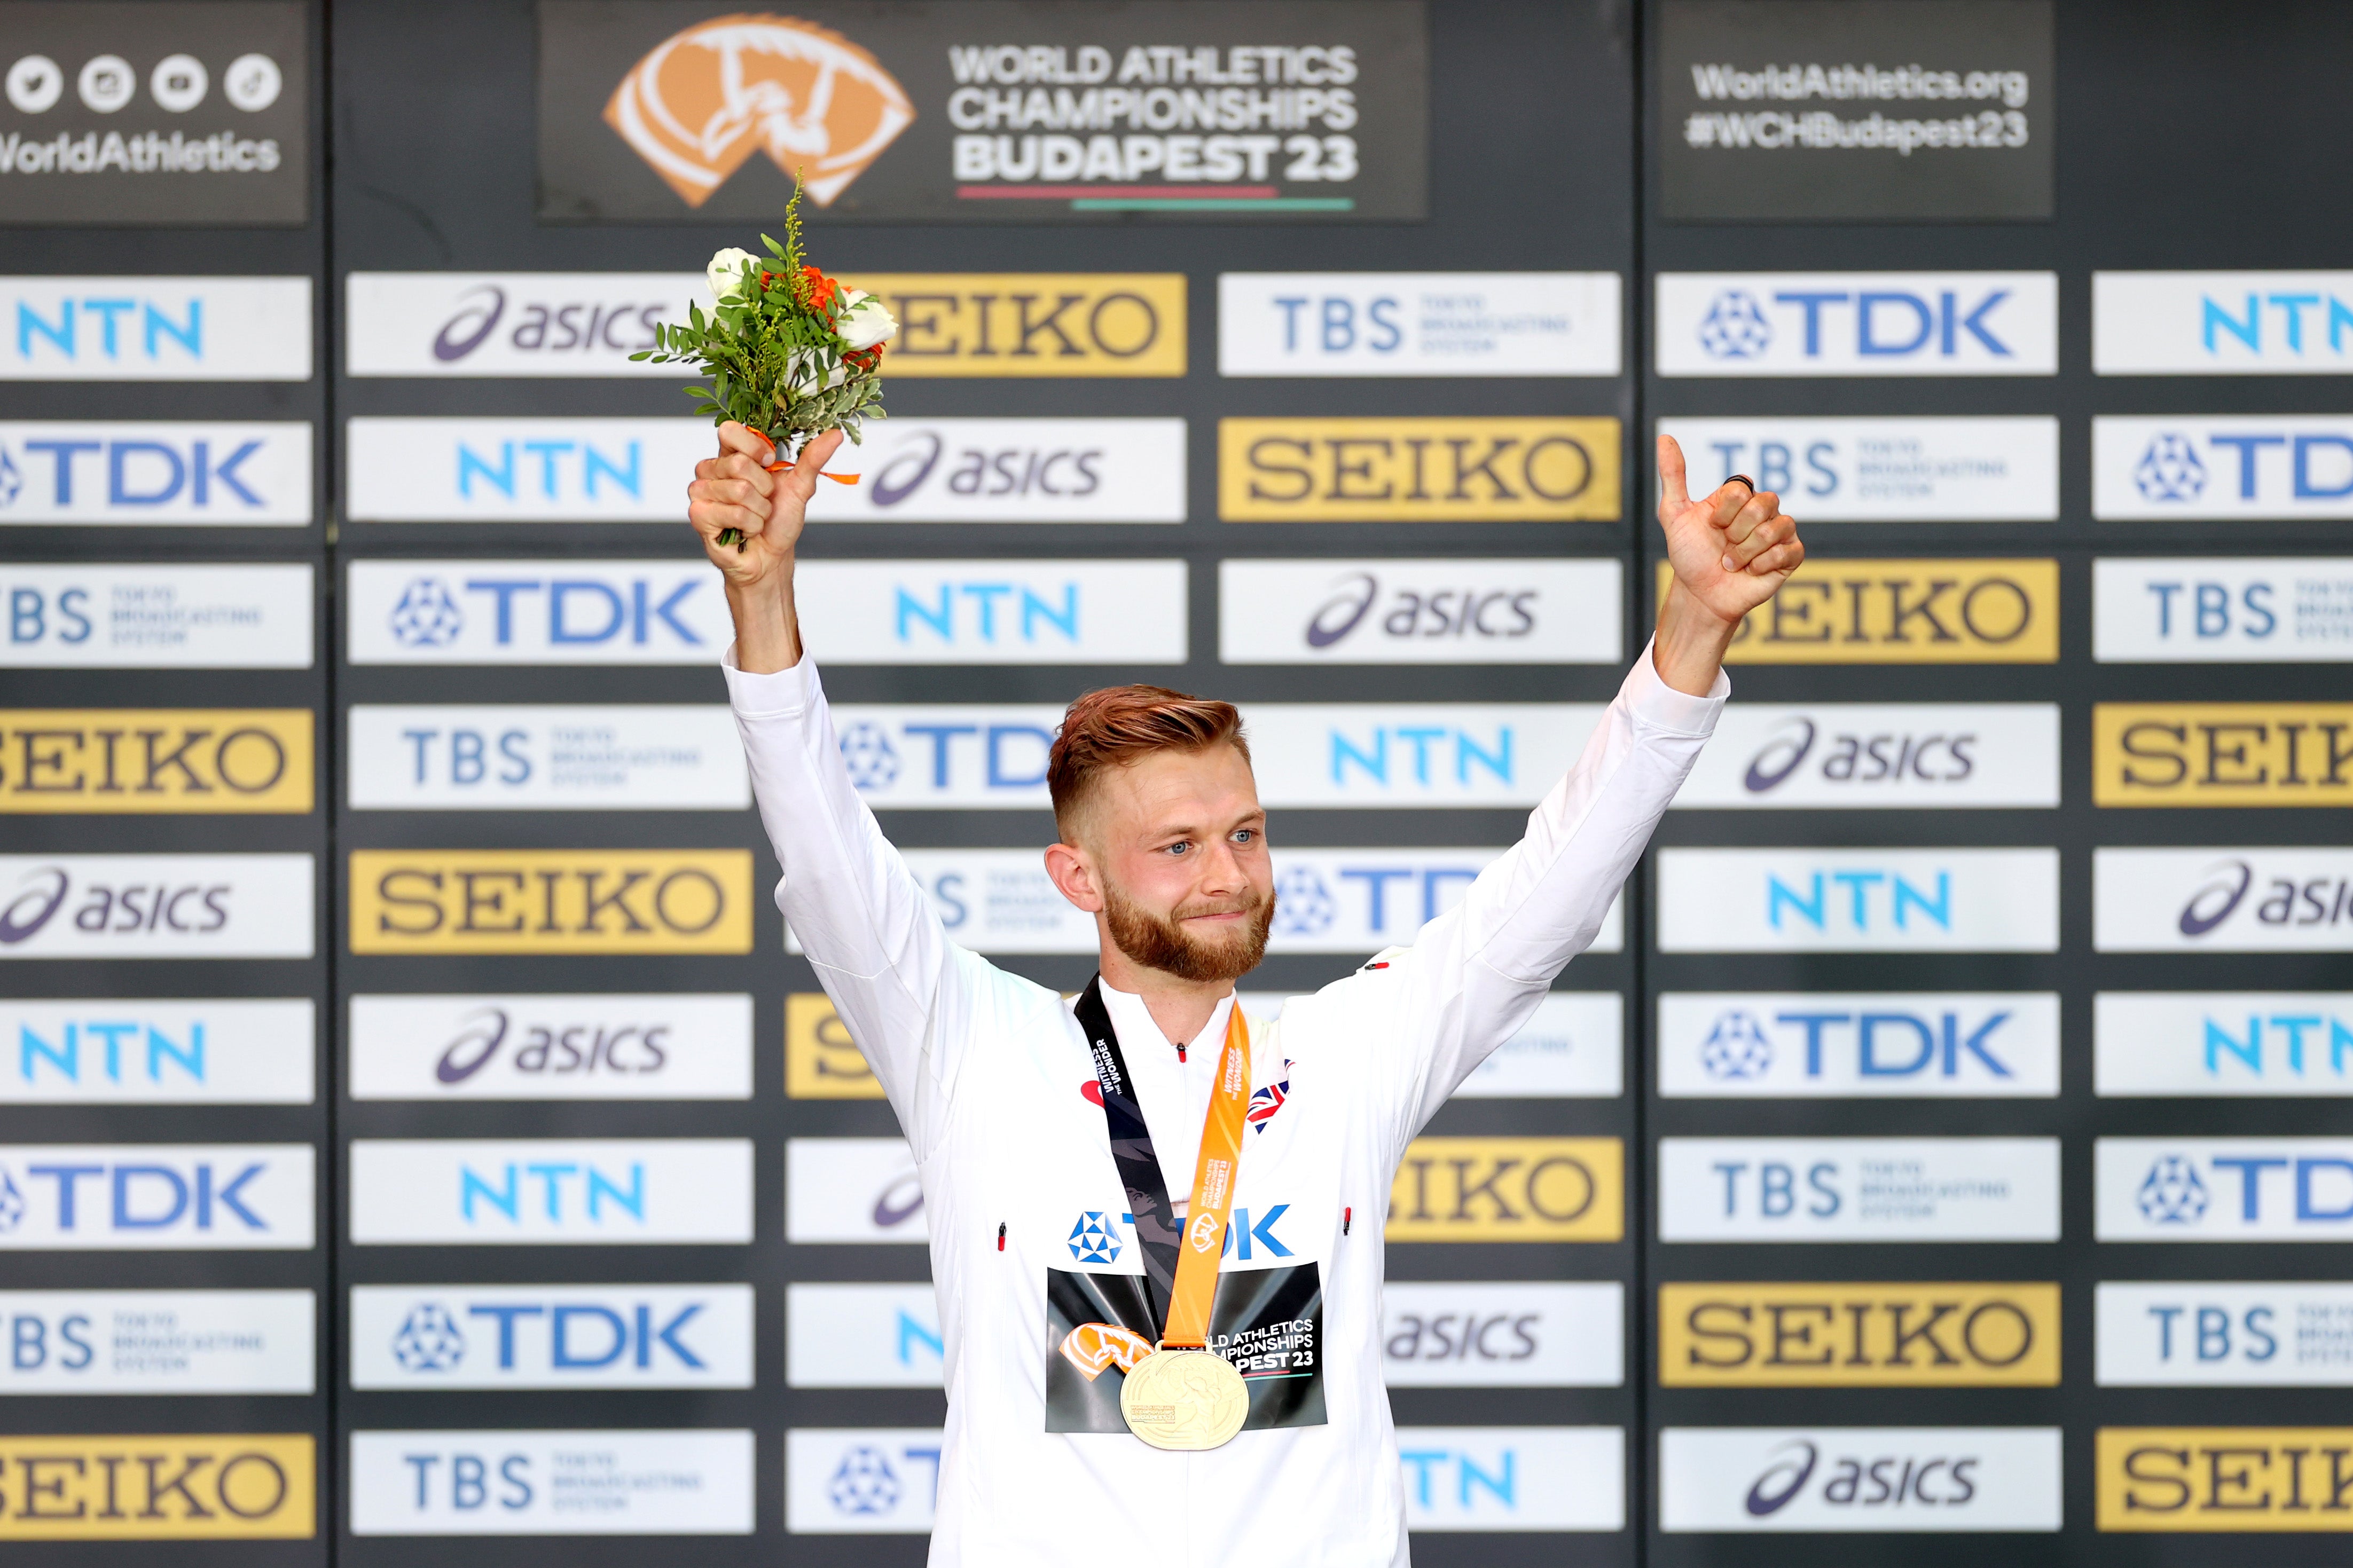 Josh Kerr became men’s 1500 metre champion